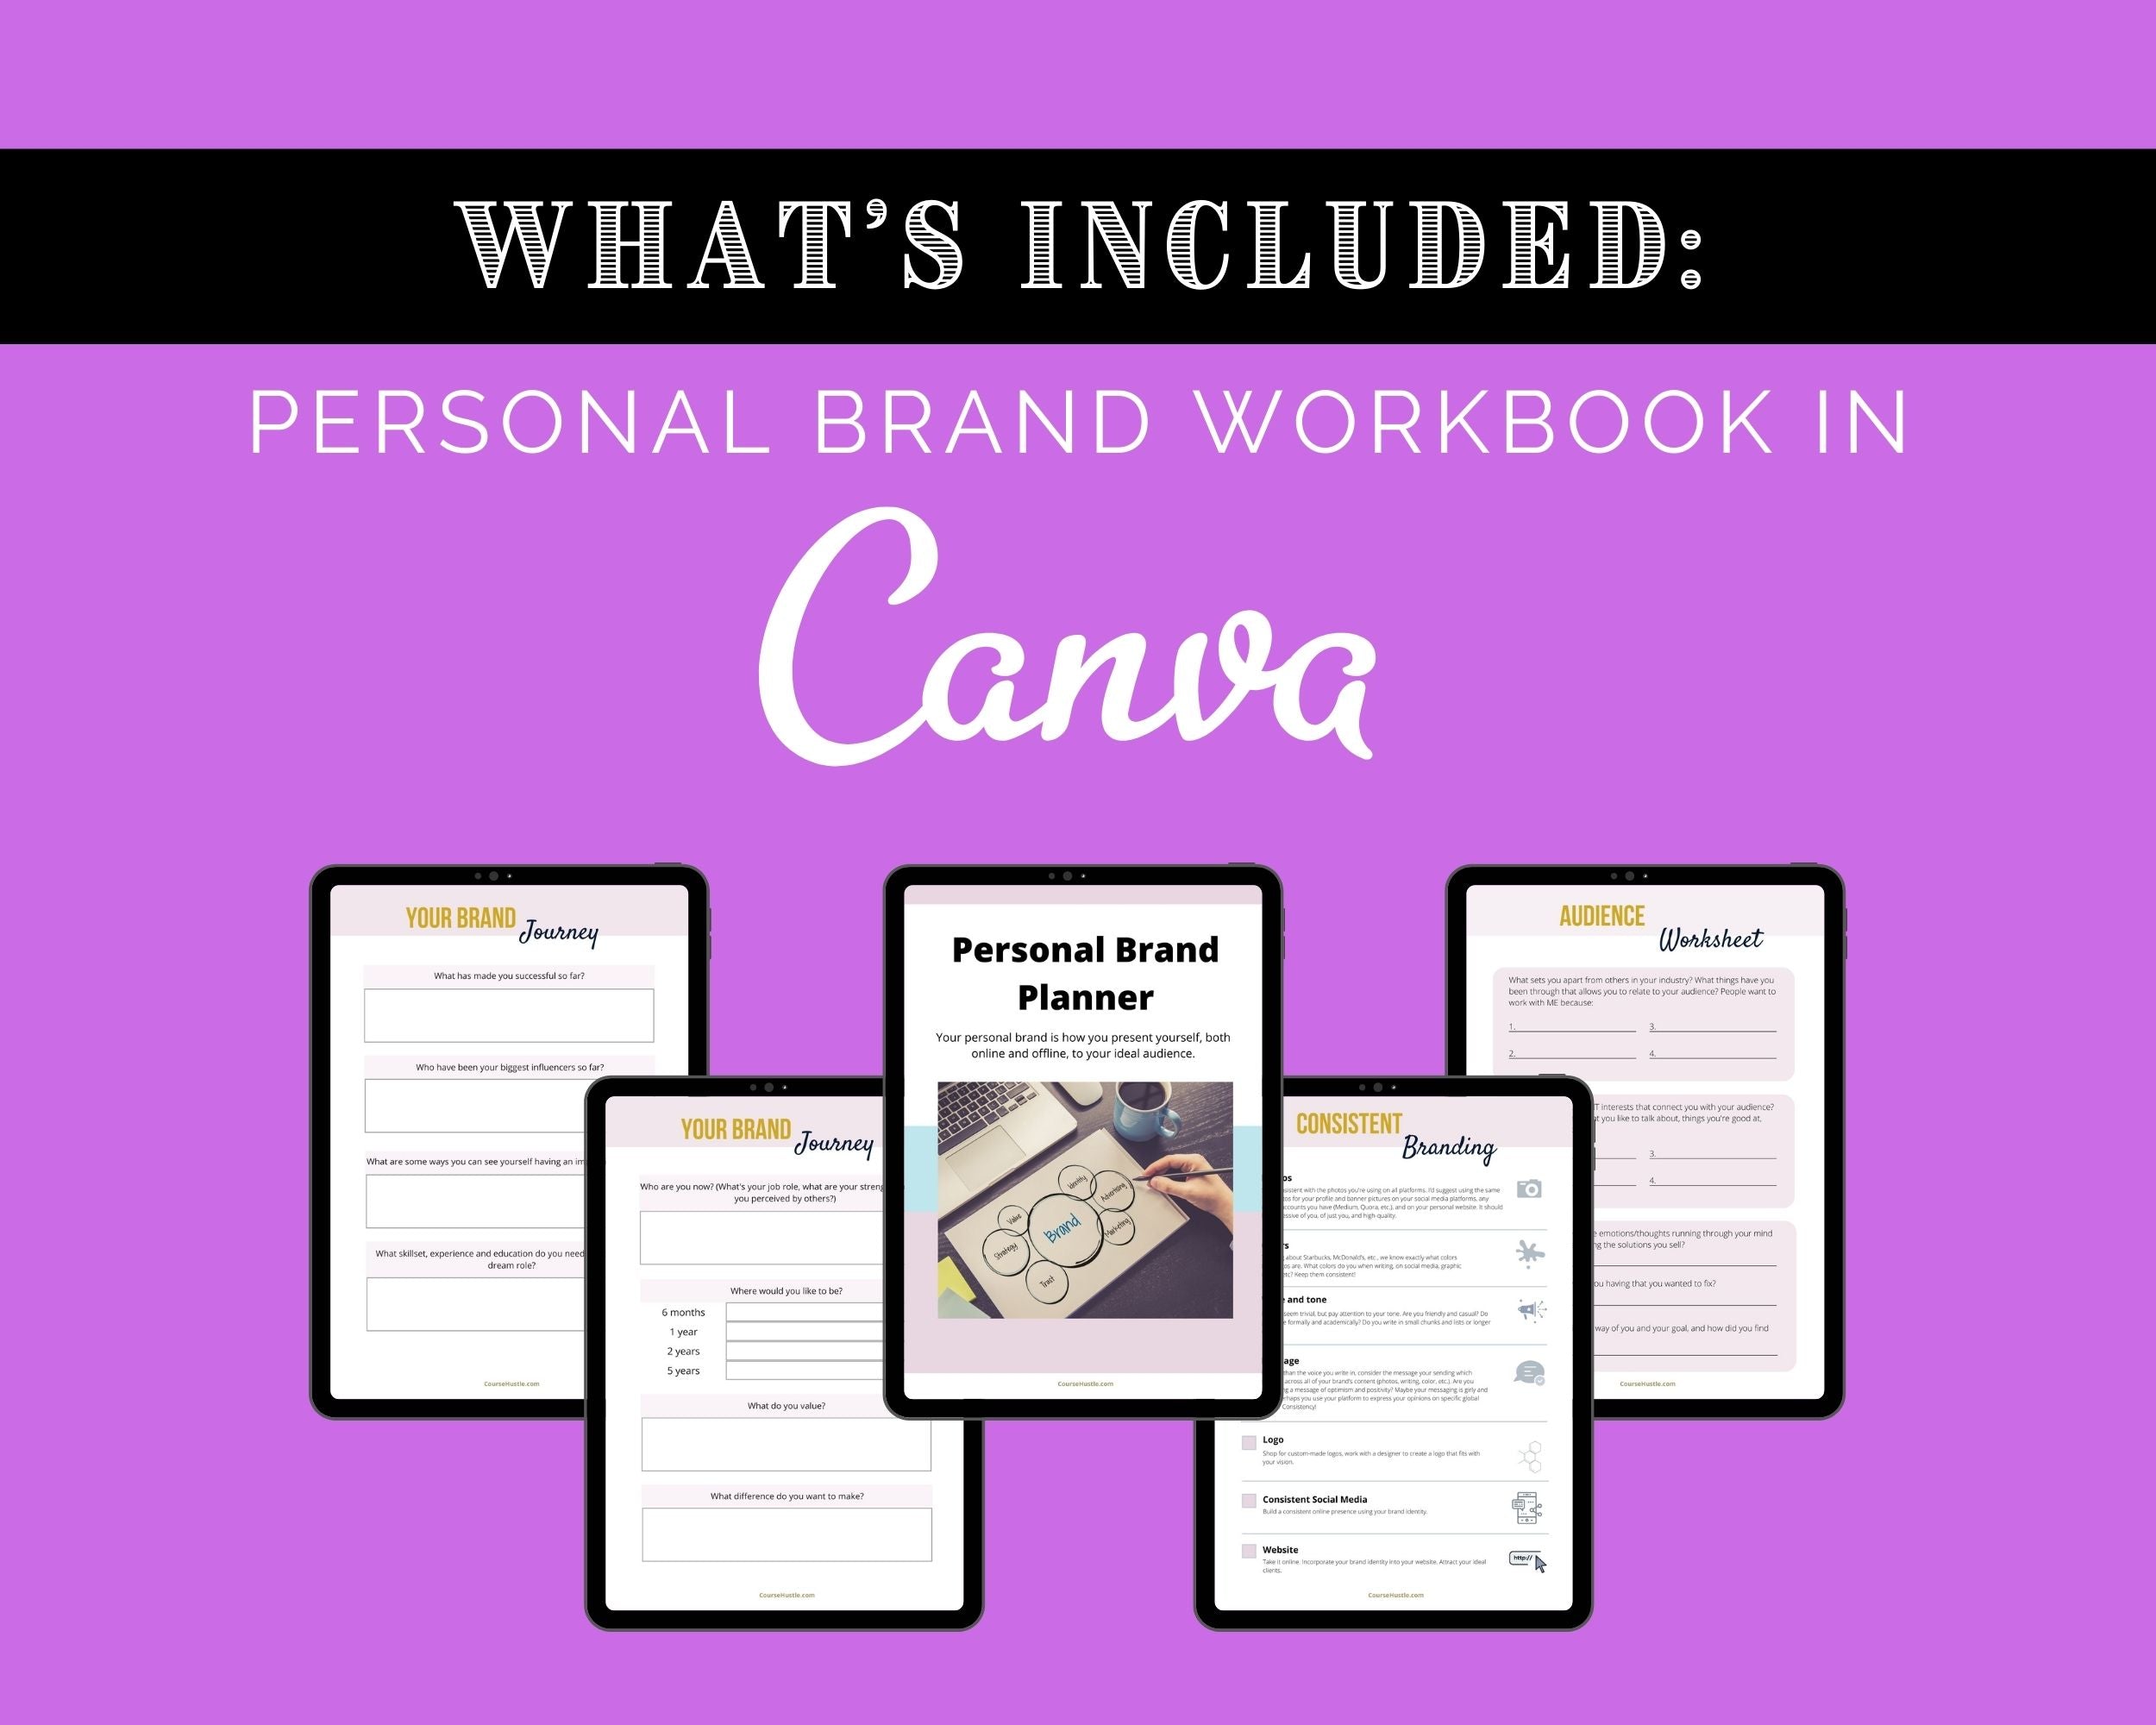 Brand Clarity Workbook | Brand Board Template | Branding Kit | Logo Design | DFY Branding Formula Ebook